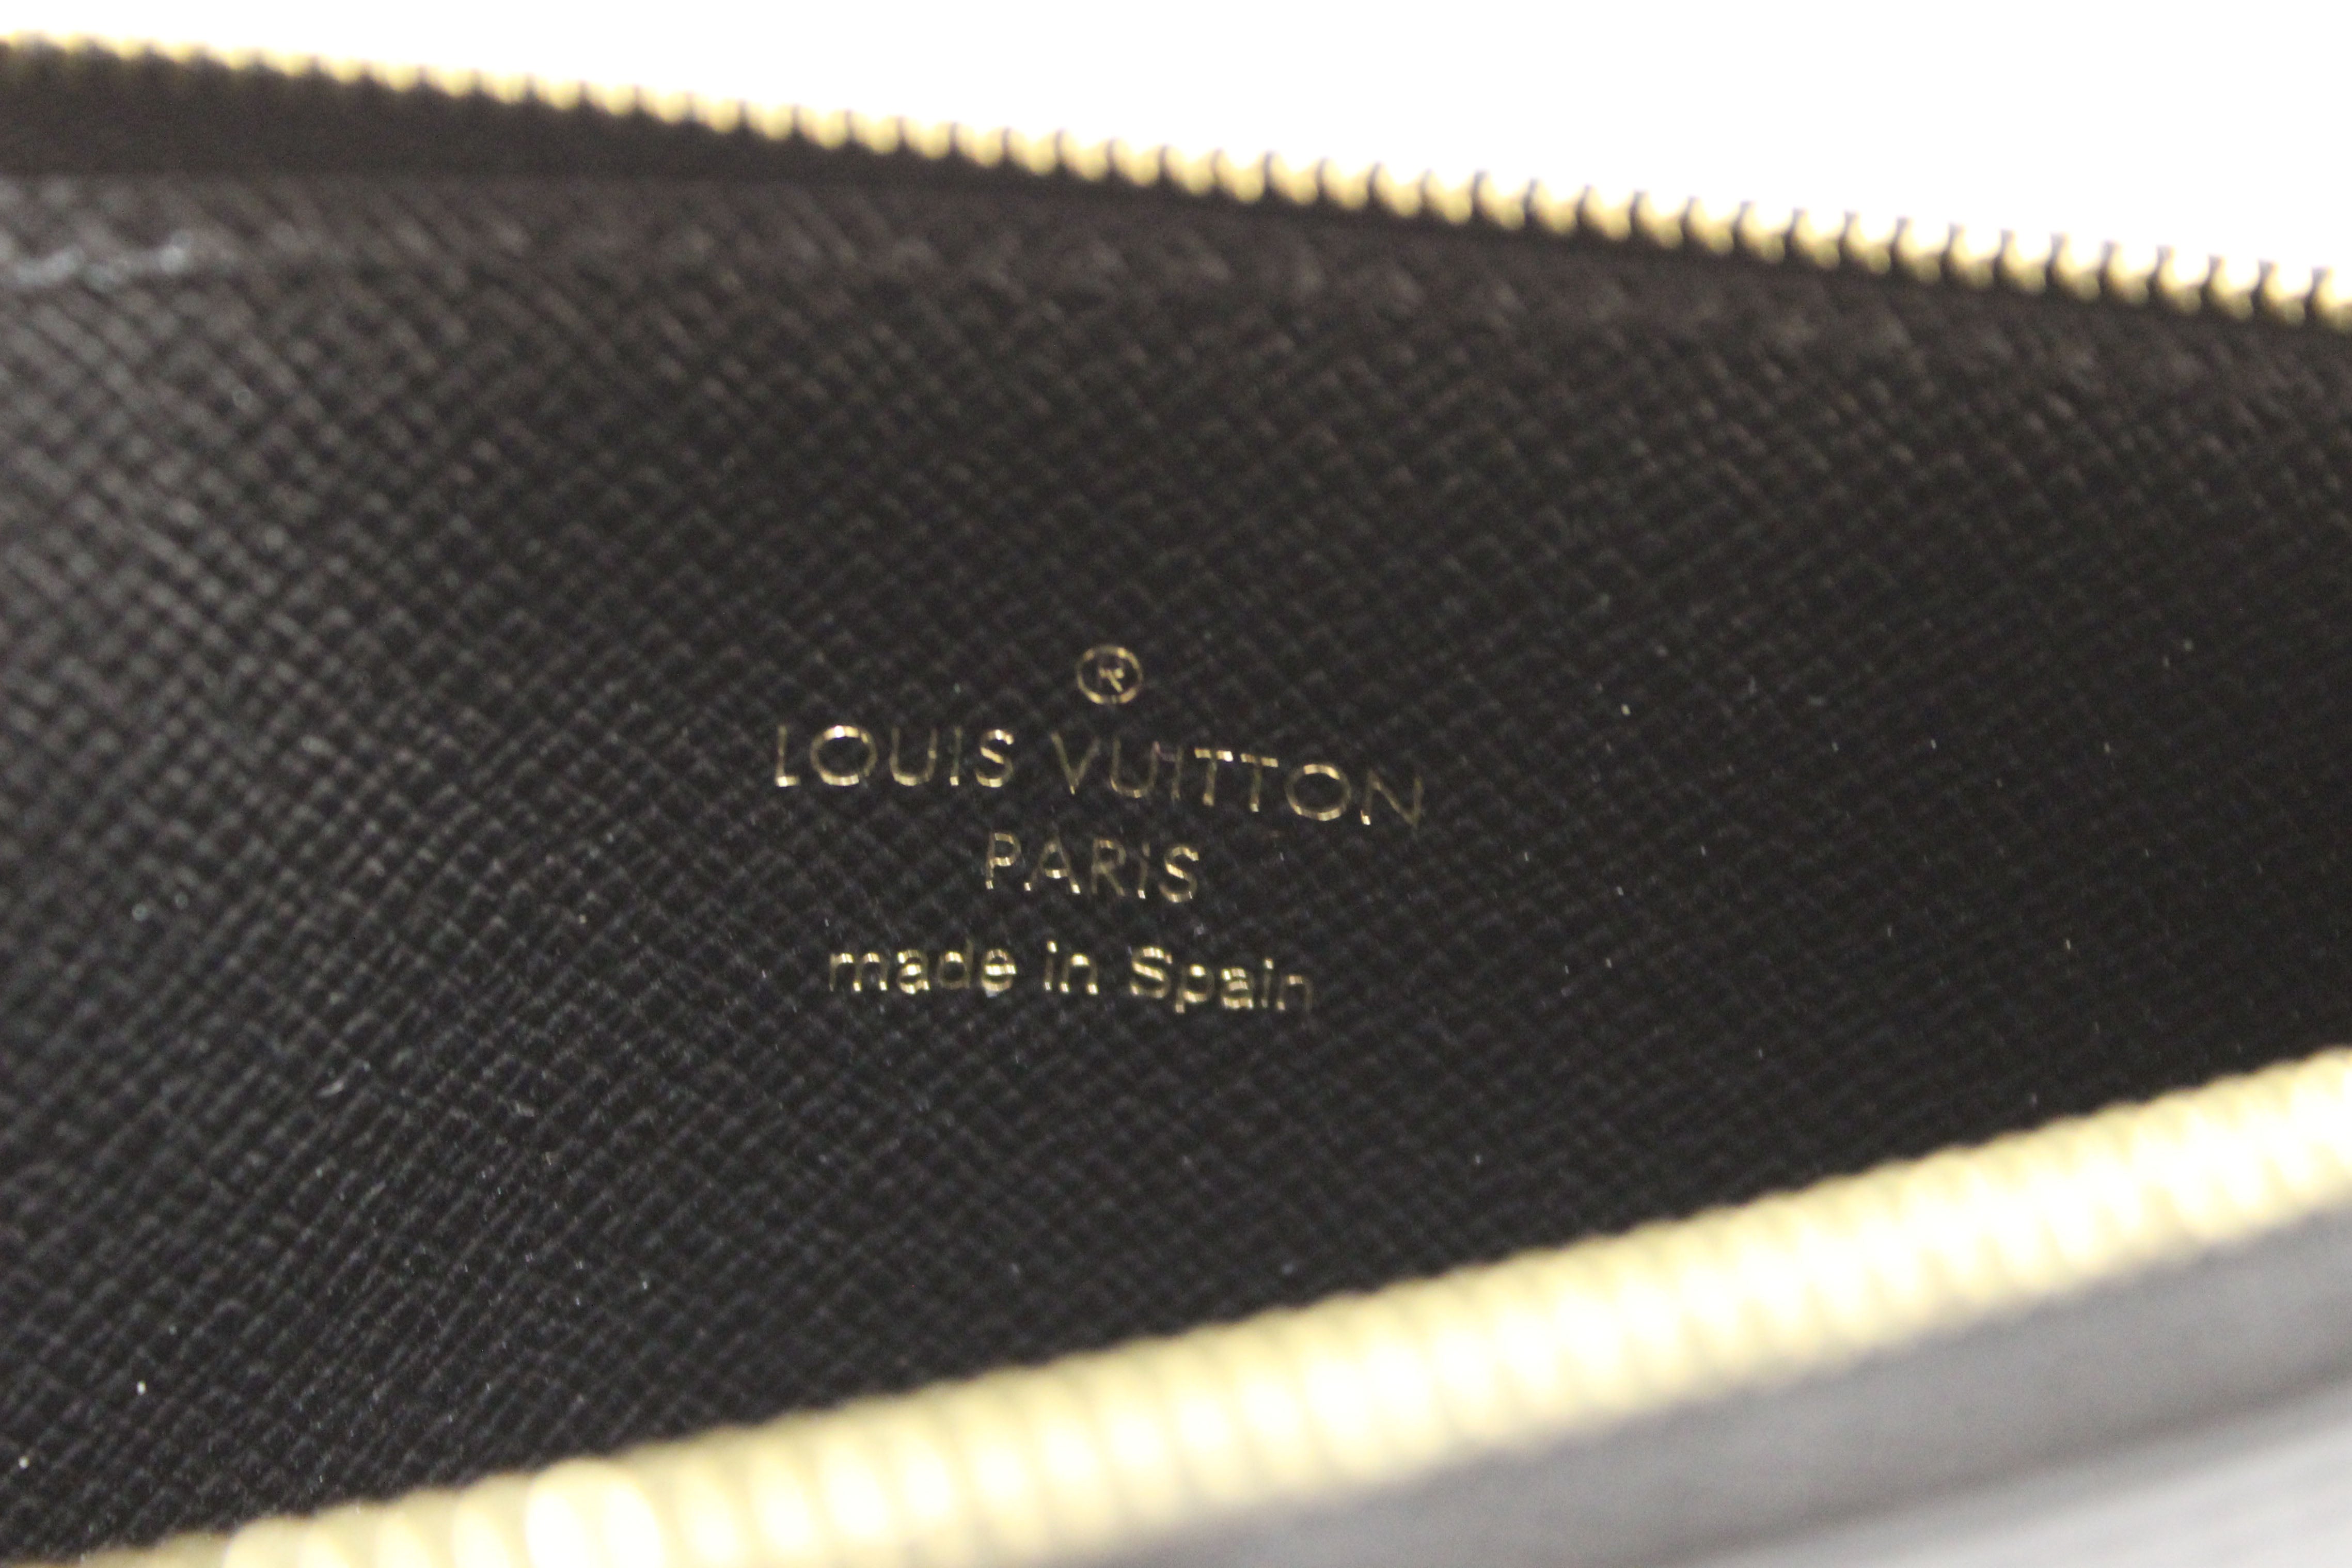 Authentic Louis Vuitton Classic Monogram with Black Leather Slim Purse